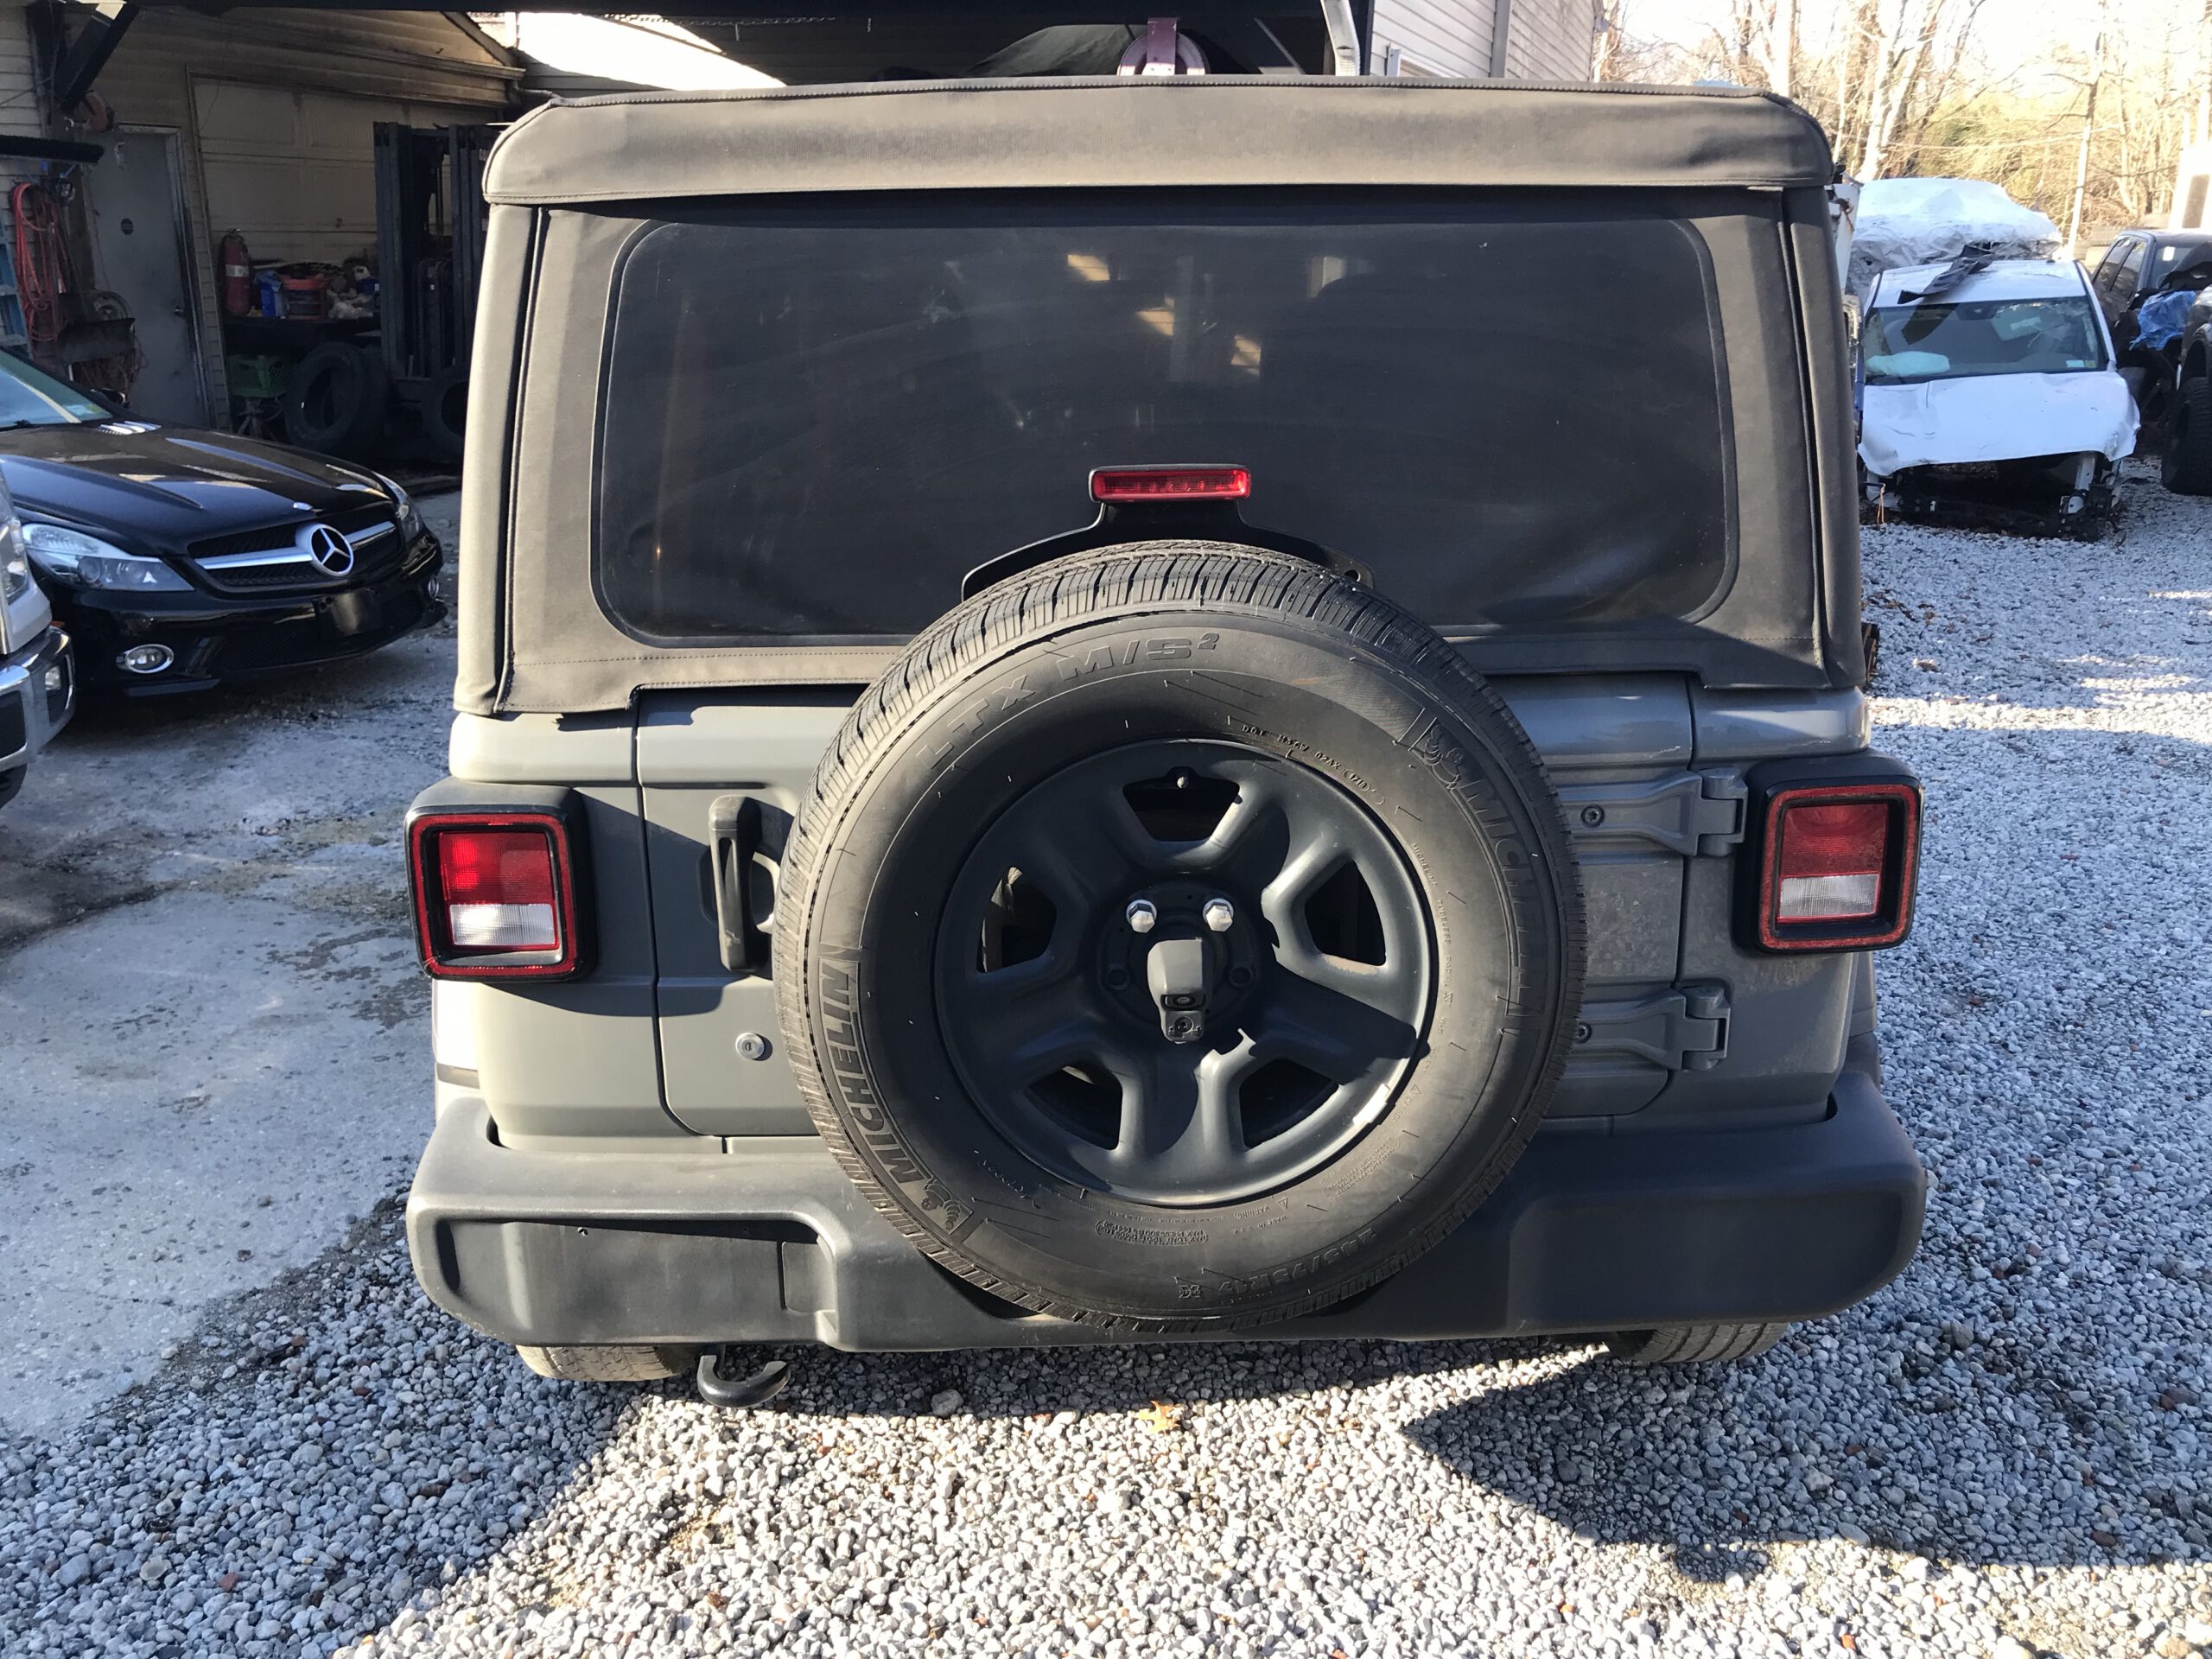 2018 Jeep Wrangler Unlimited 4dr JL front damage EZ fix $18,999 full